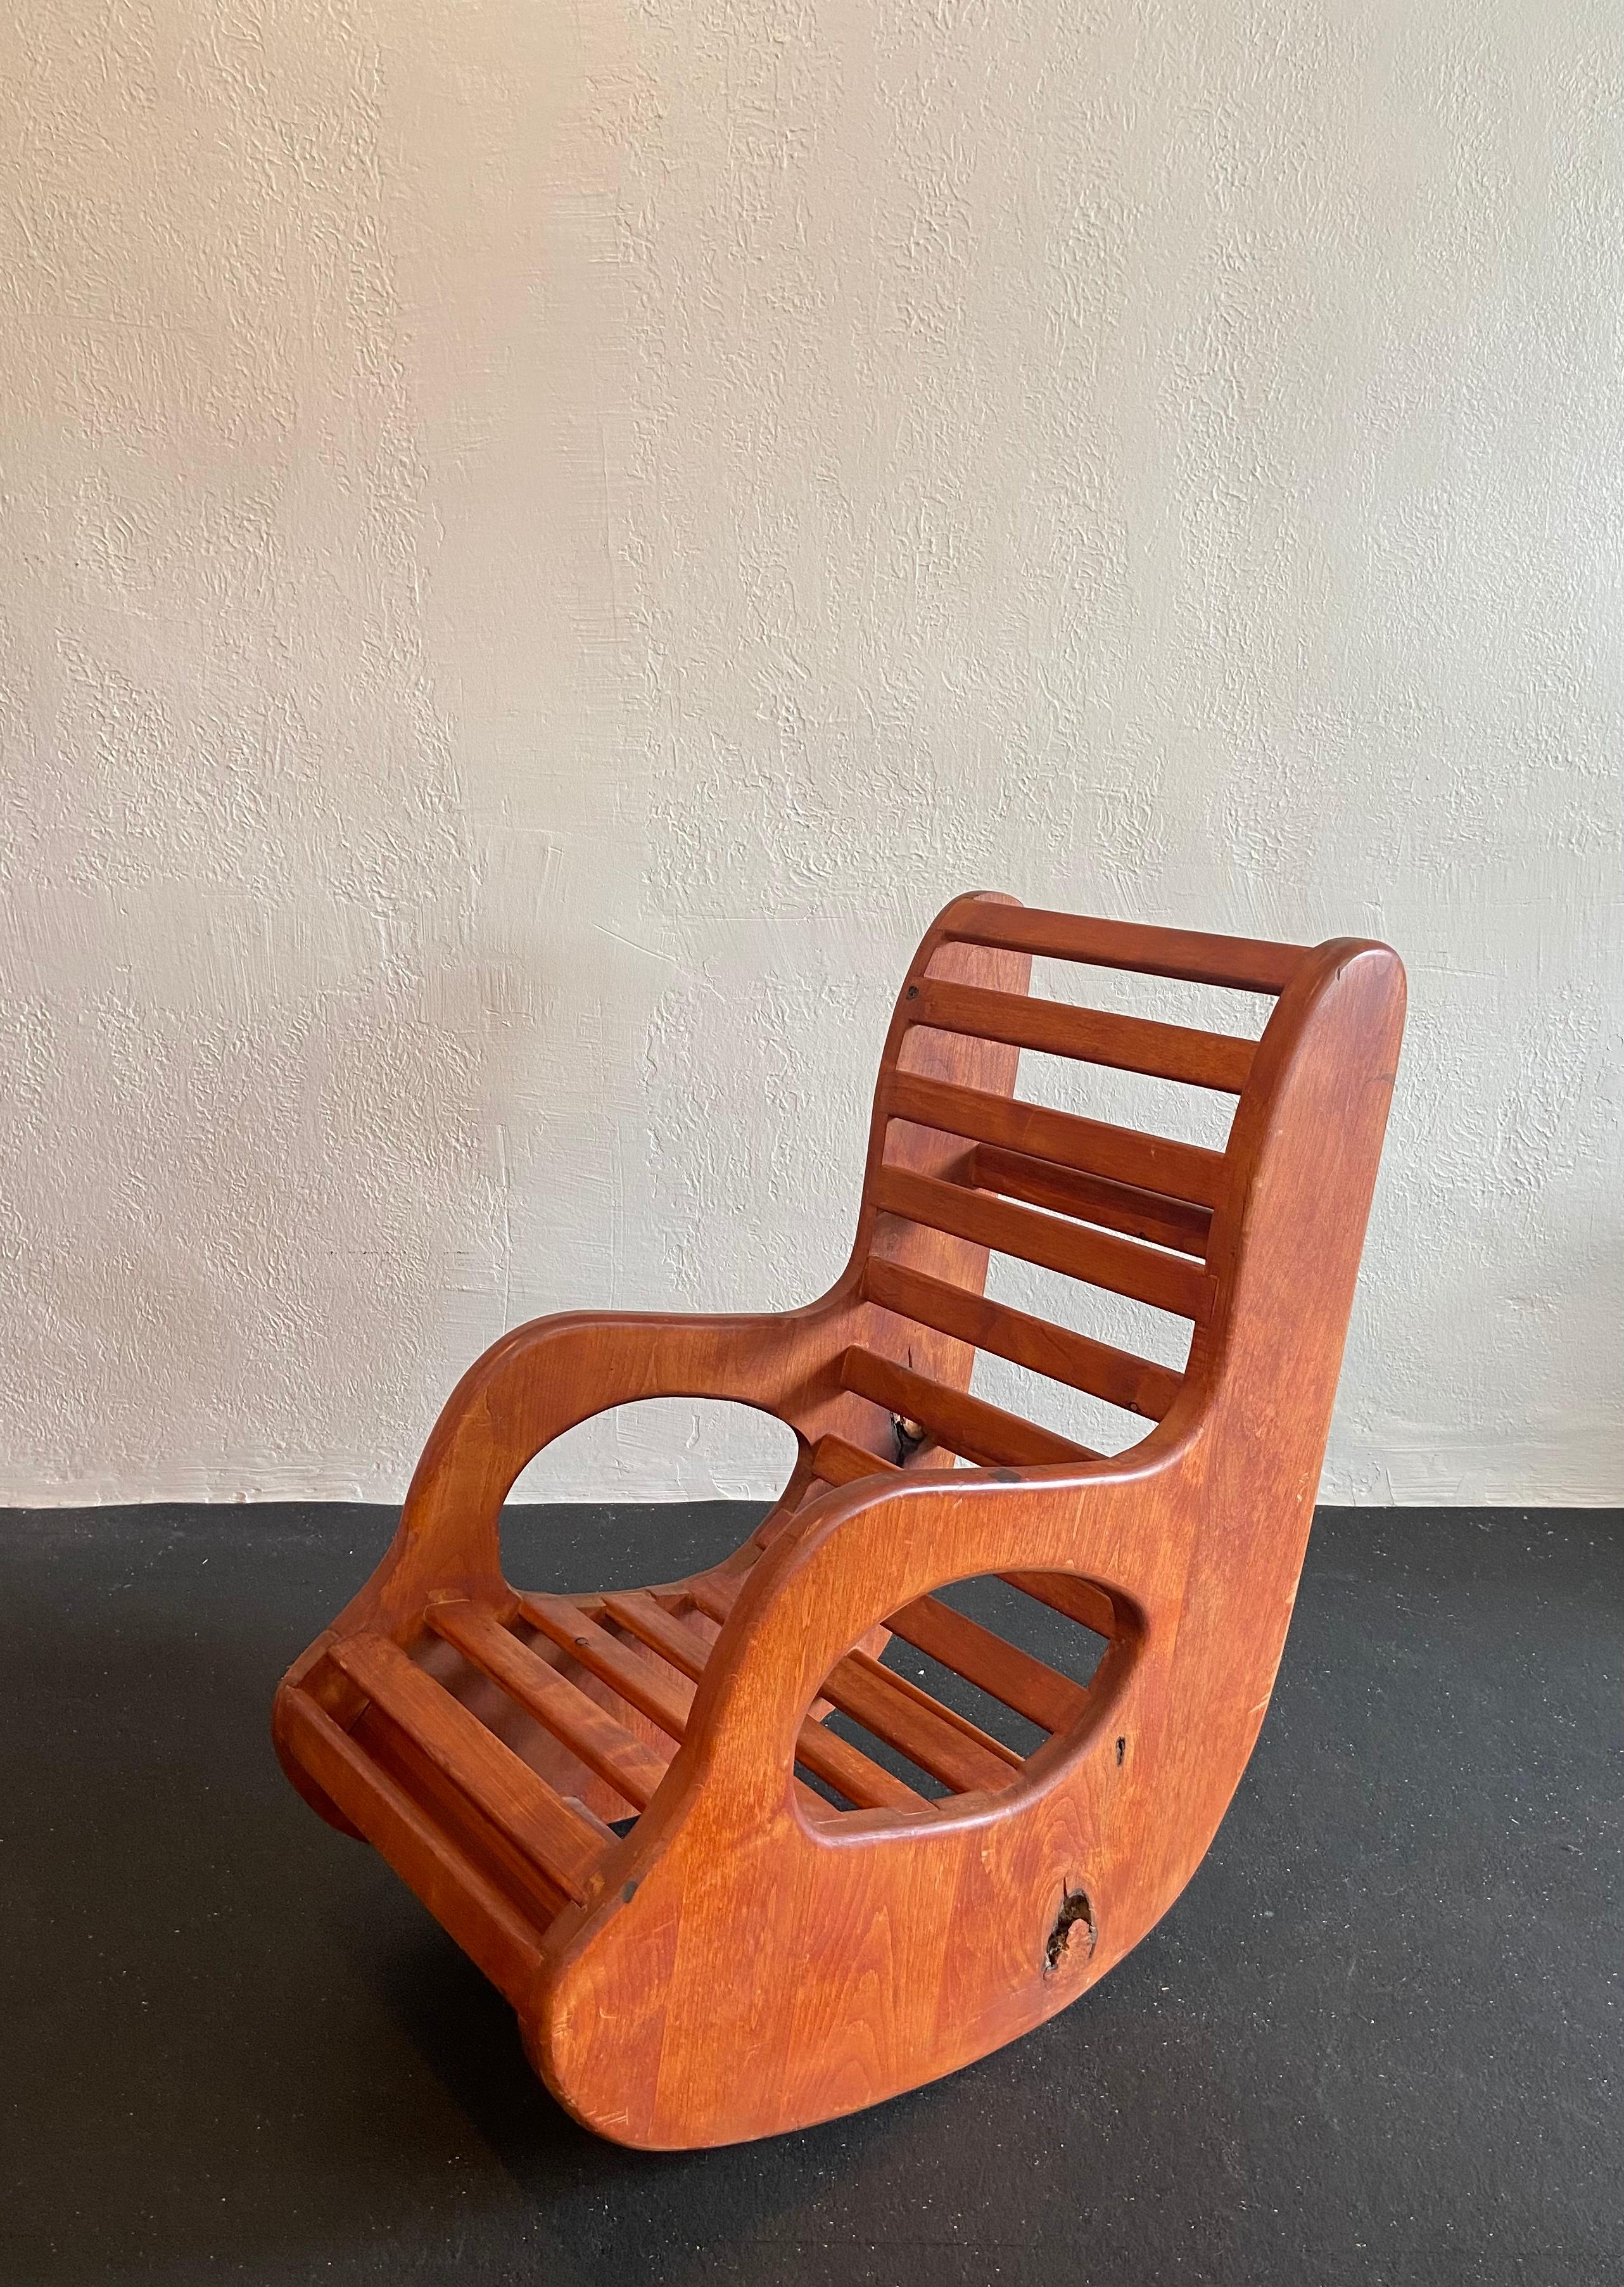 Studio Craft Organic-Form Rocking Chair For Sale 1